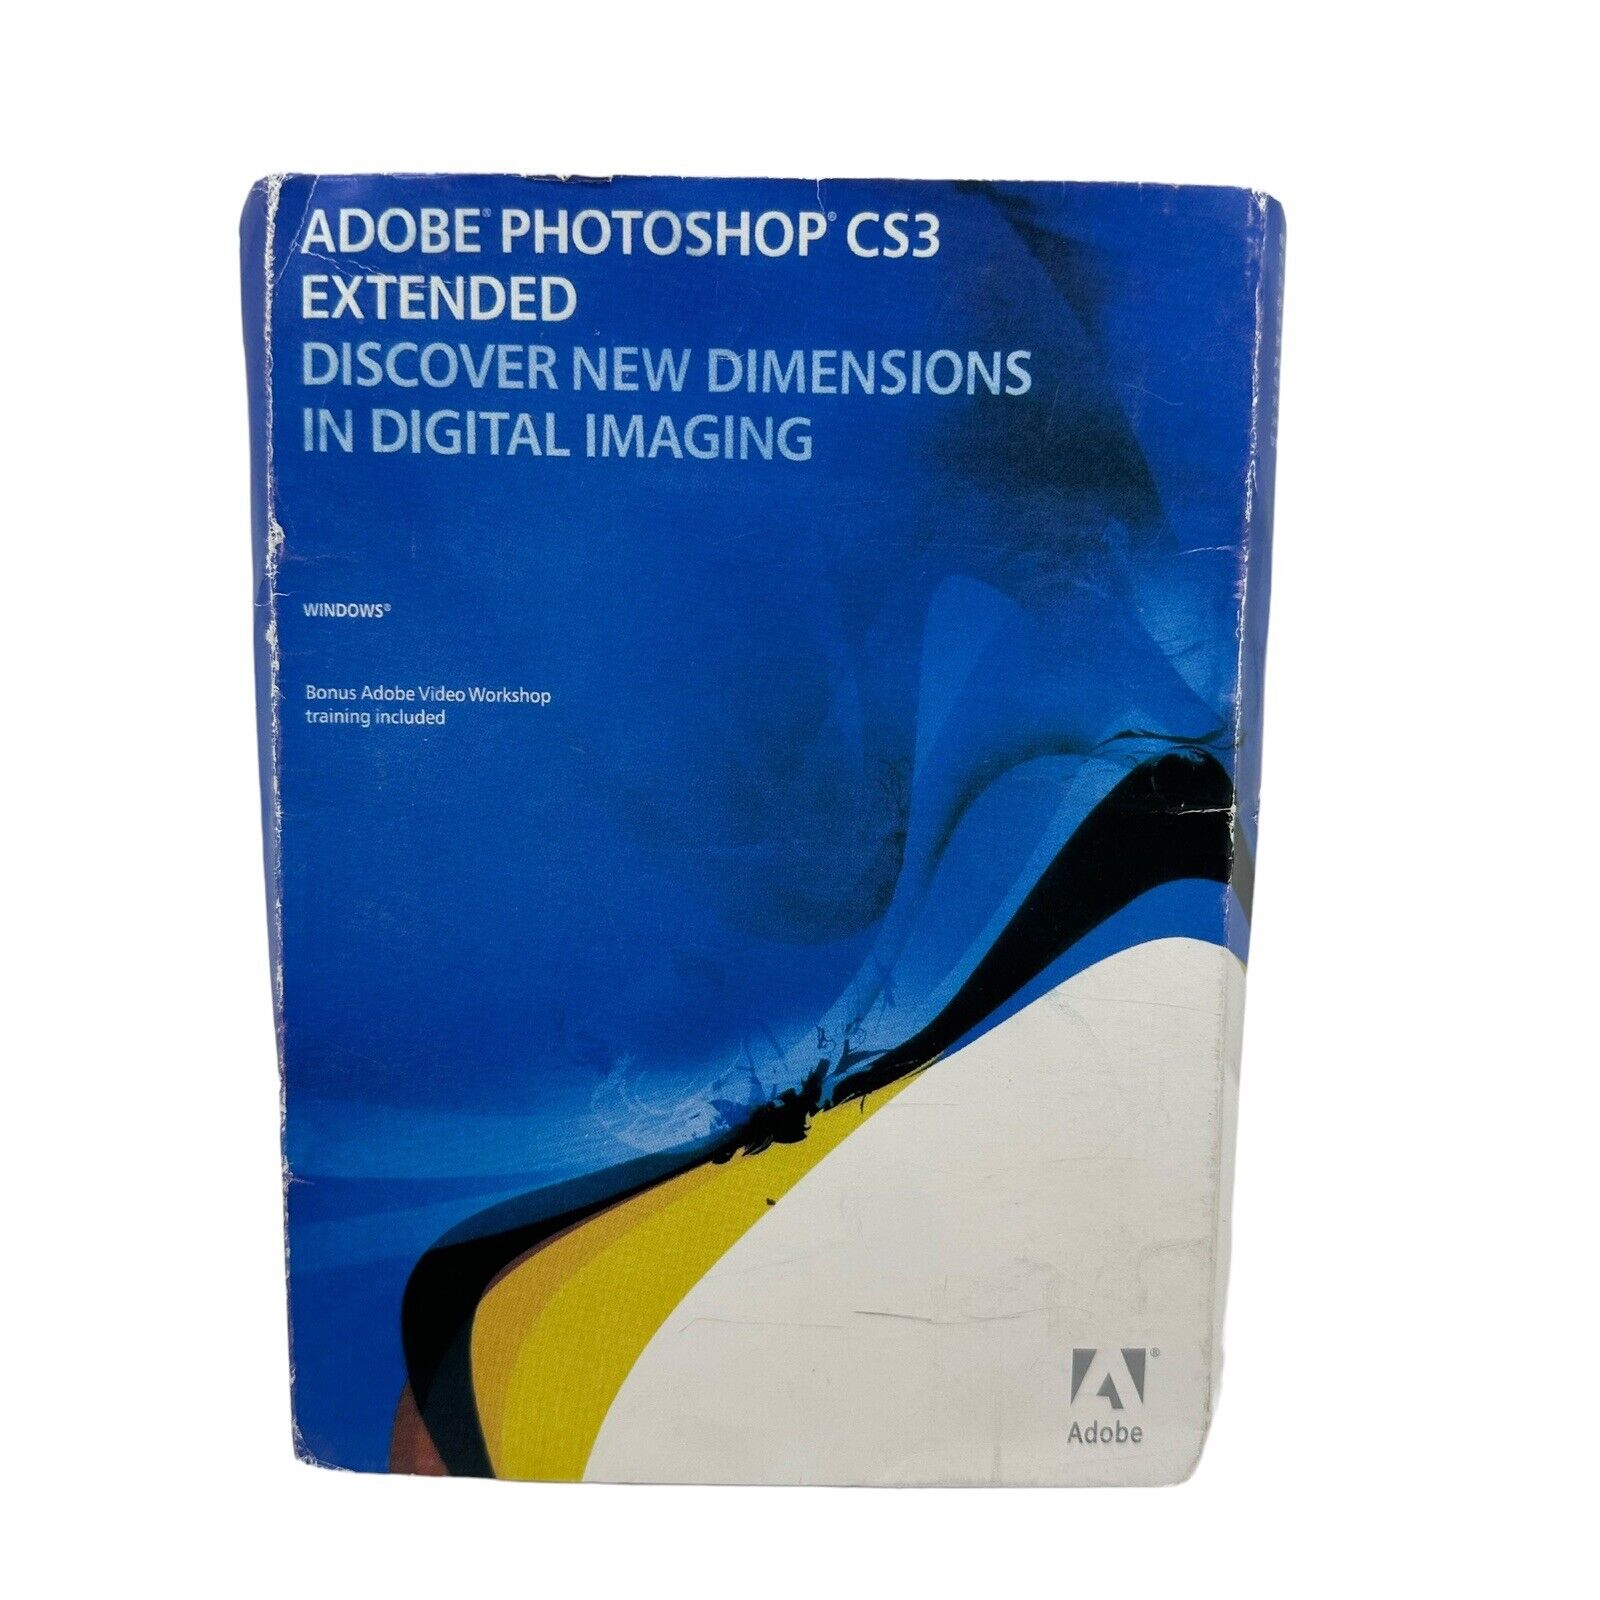 Adobe Photoshop CS3 Extended Macintosh Mac with Video Workshop